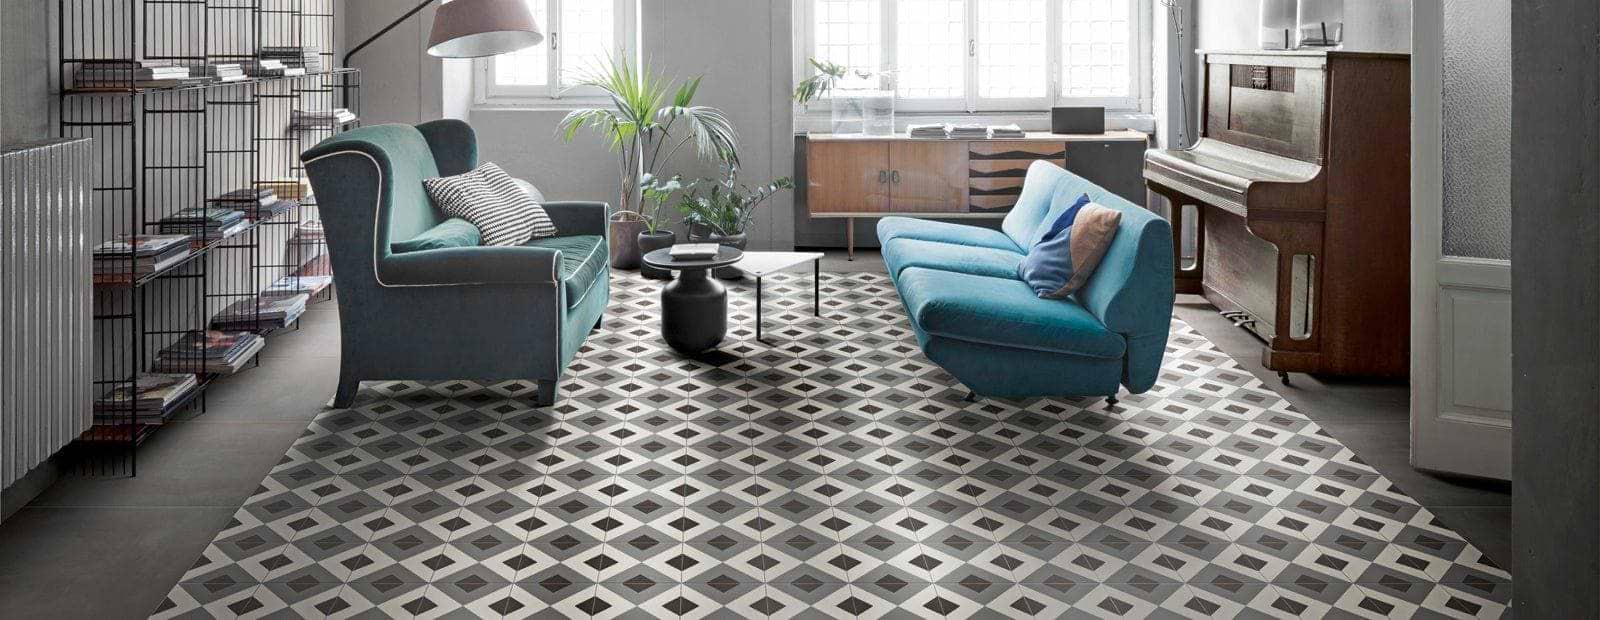 Minoli Wall & Floor Tiles 20 x 20 x 1cm Sold by 0.96m² De-Segni MOUK Decor Matt